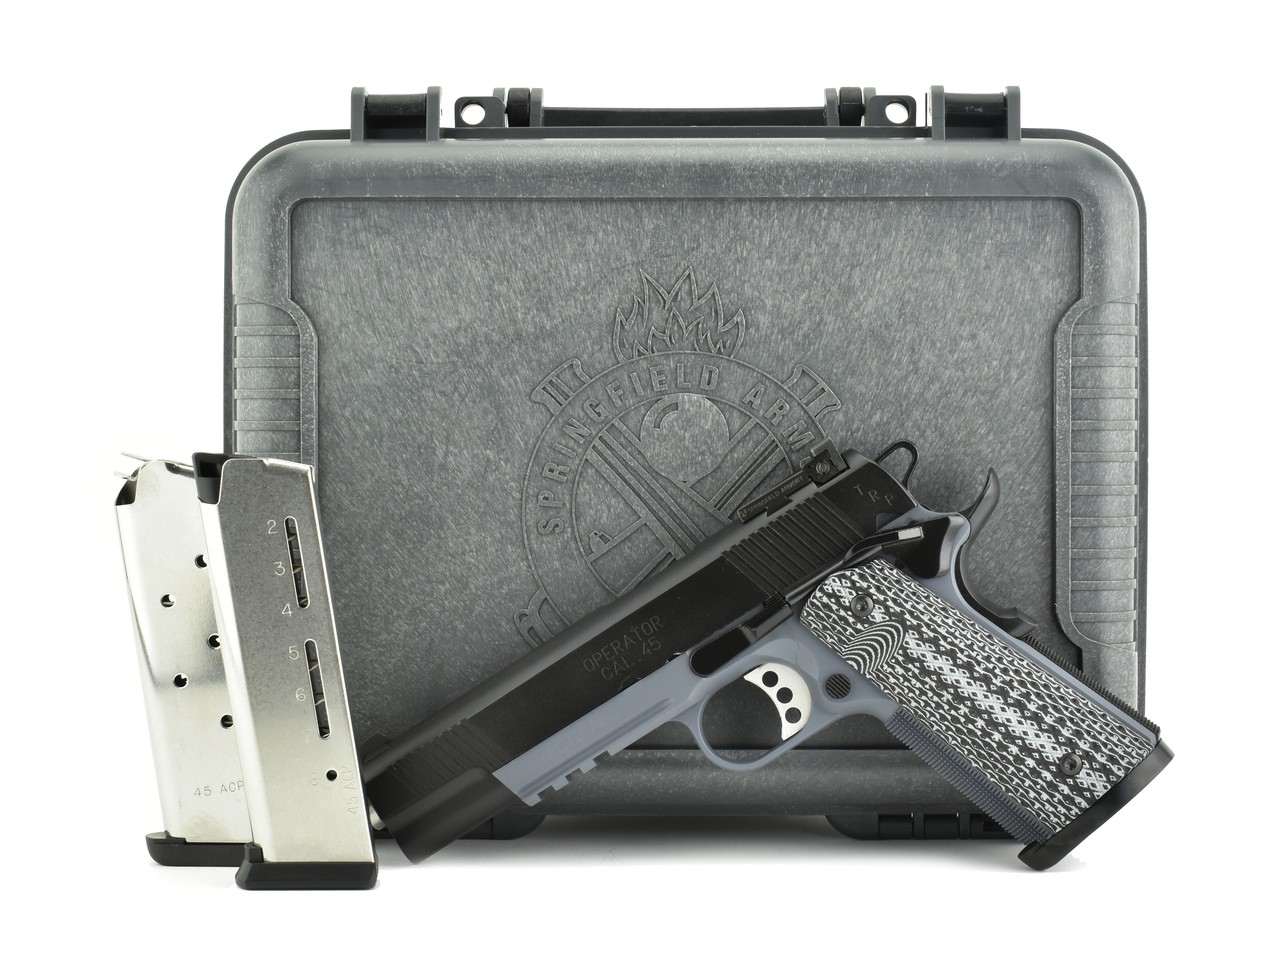 Springfield TRP Operator .45 ACP caliber pistol for sale.